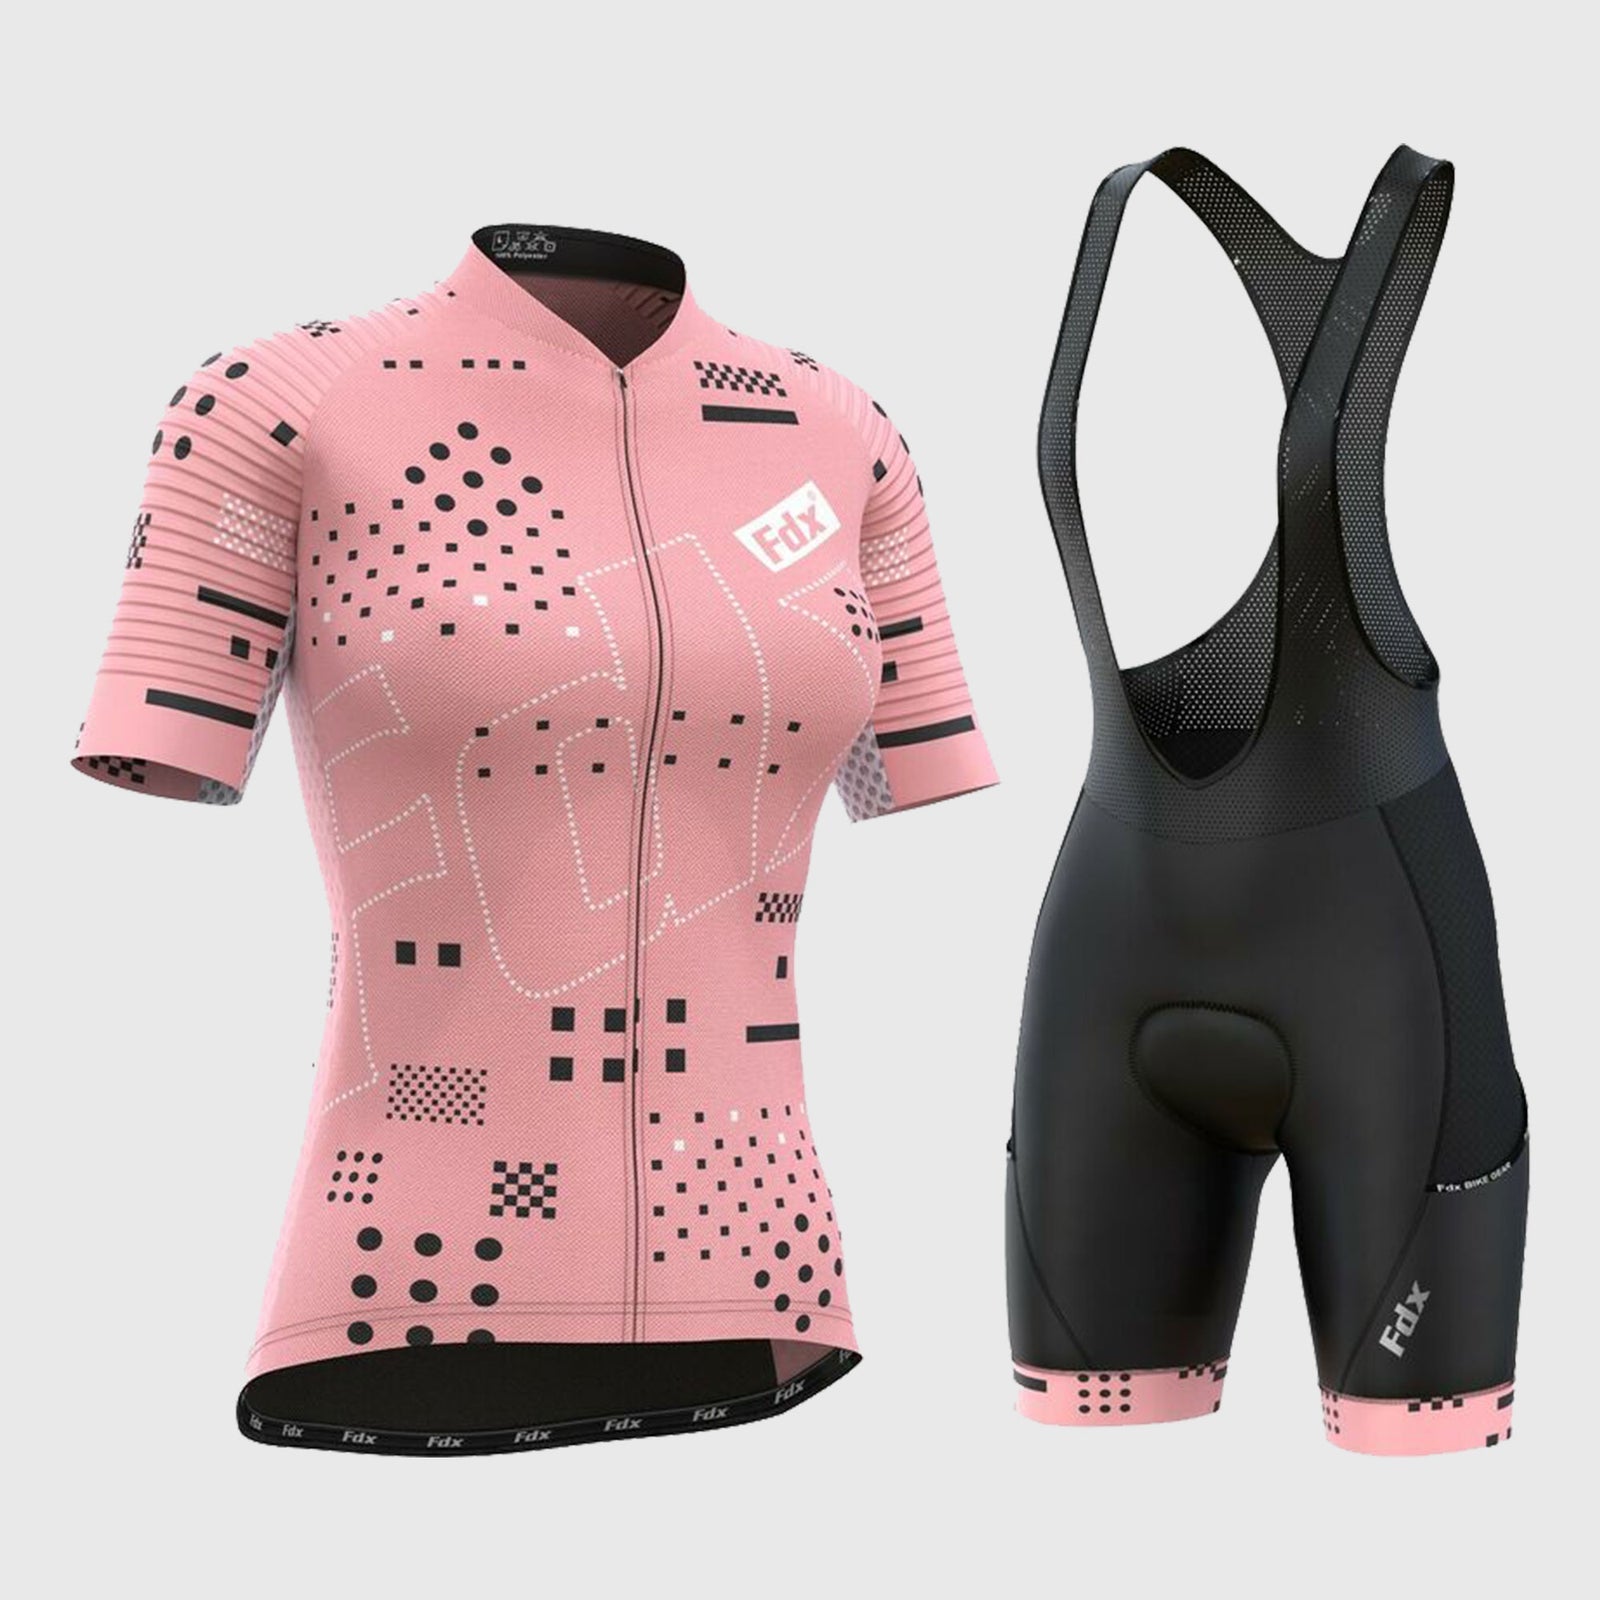 Fdx Womens Tea Pink Short Sleeve Cycling Jersey & Gel Padded Bib Shorts Best Summer Road Bike Wear Light Weight, Hi-viz Reflectors & Pockets - All Day